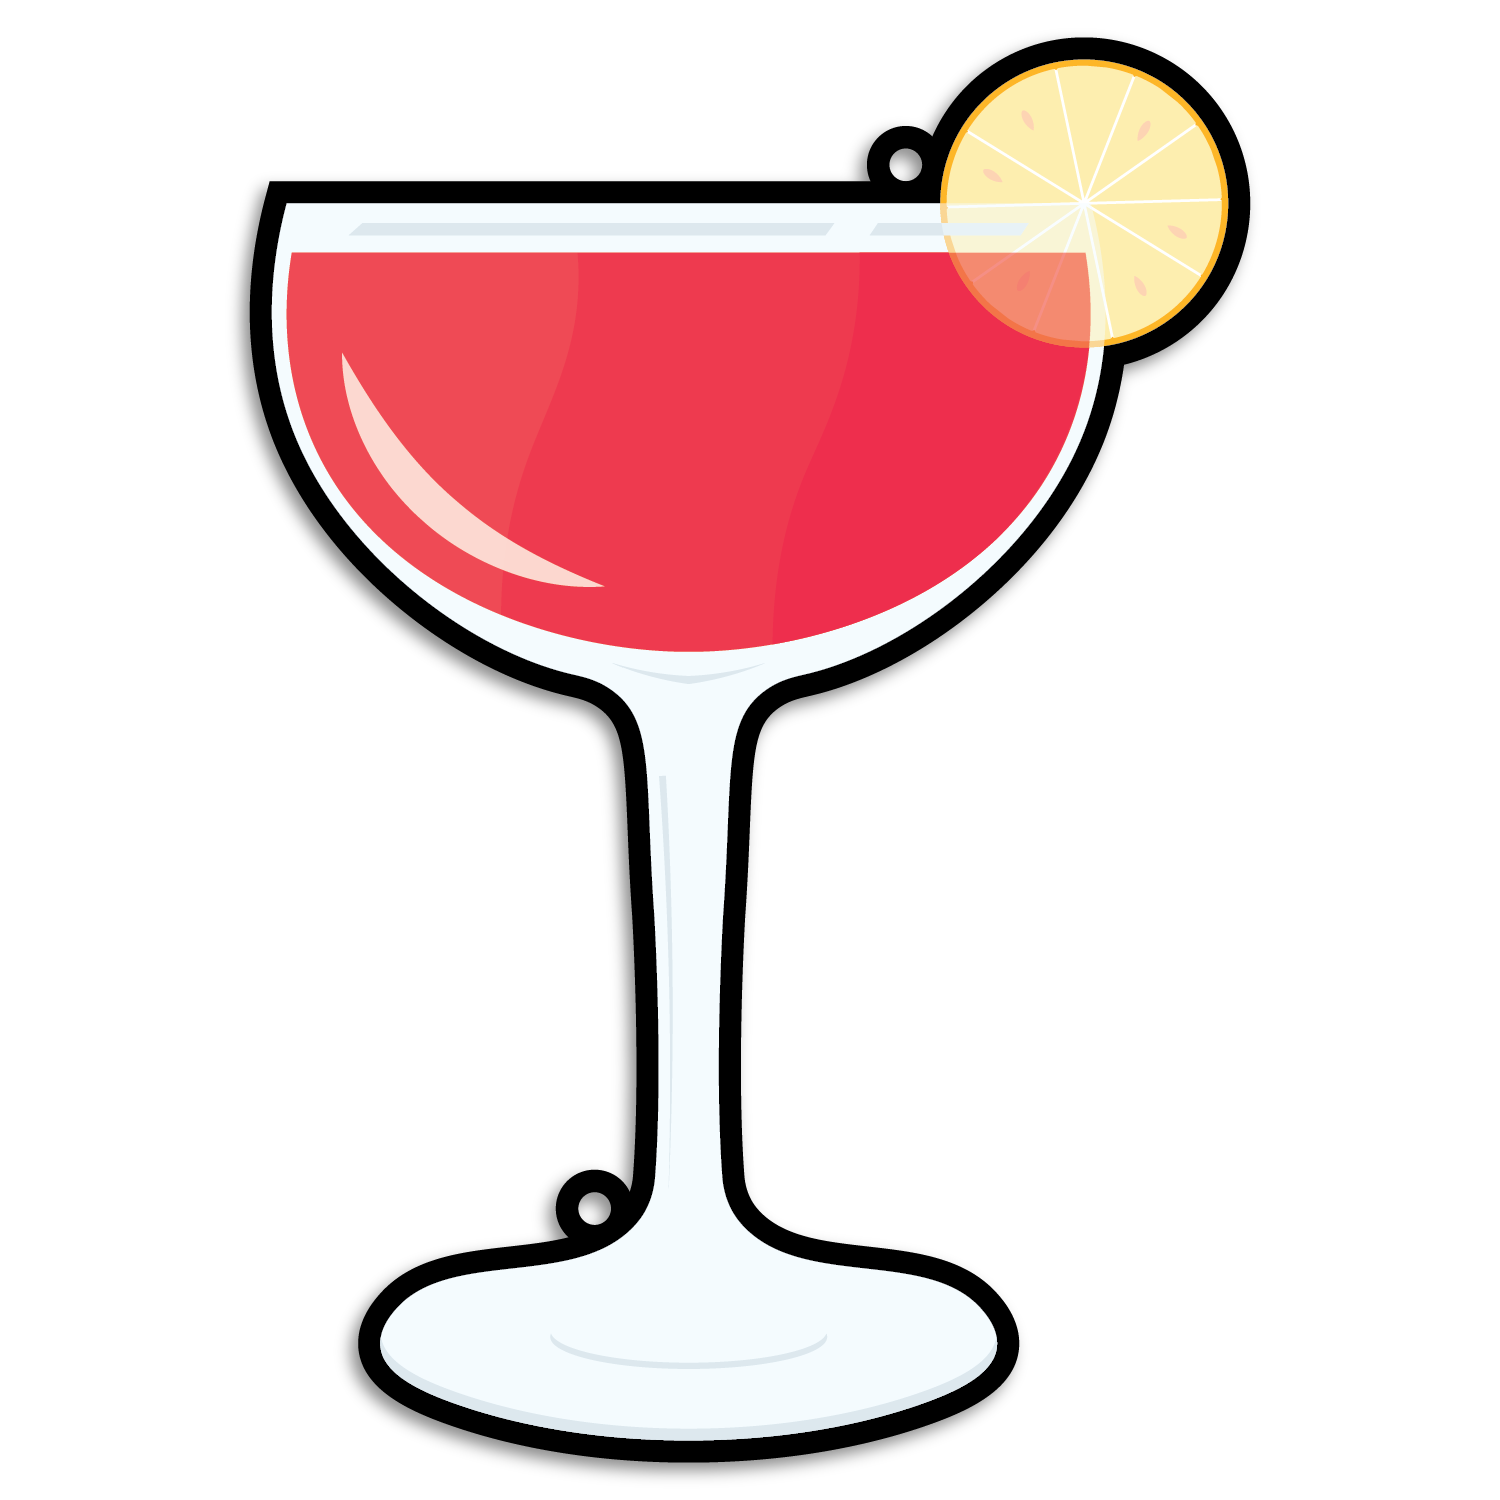 Cosmopolitan Cocktail